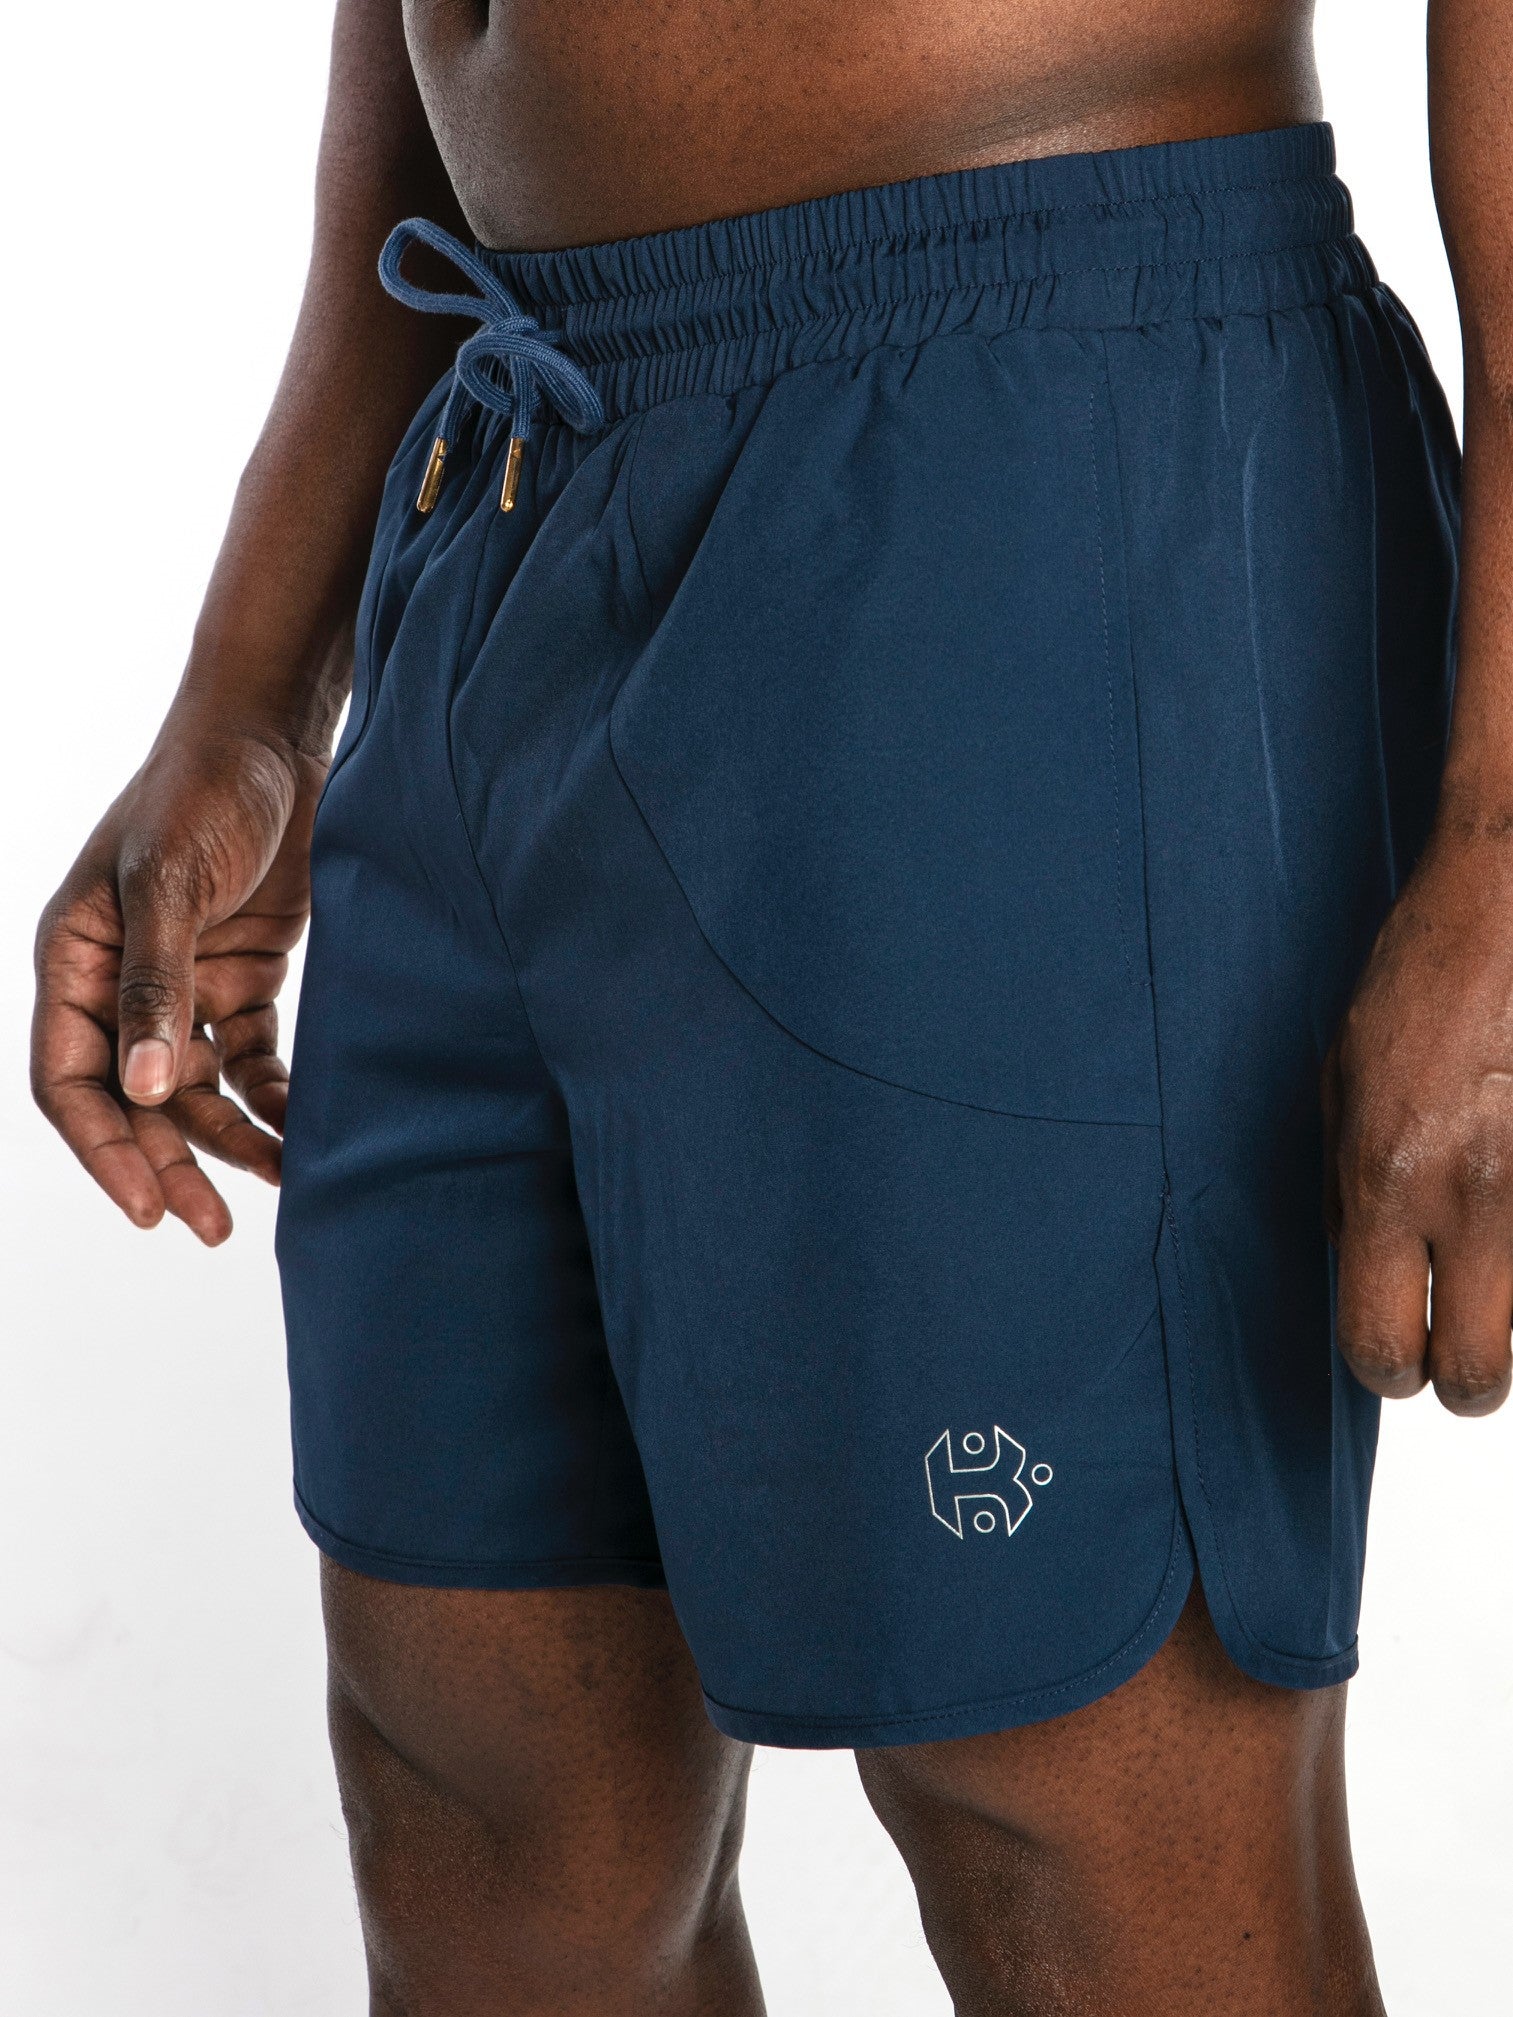 Men\'s Recycled Plastic Bottle Shorts. – KNXSAU